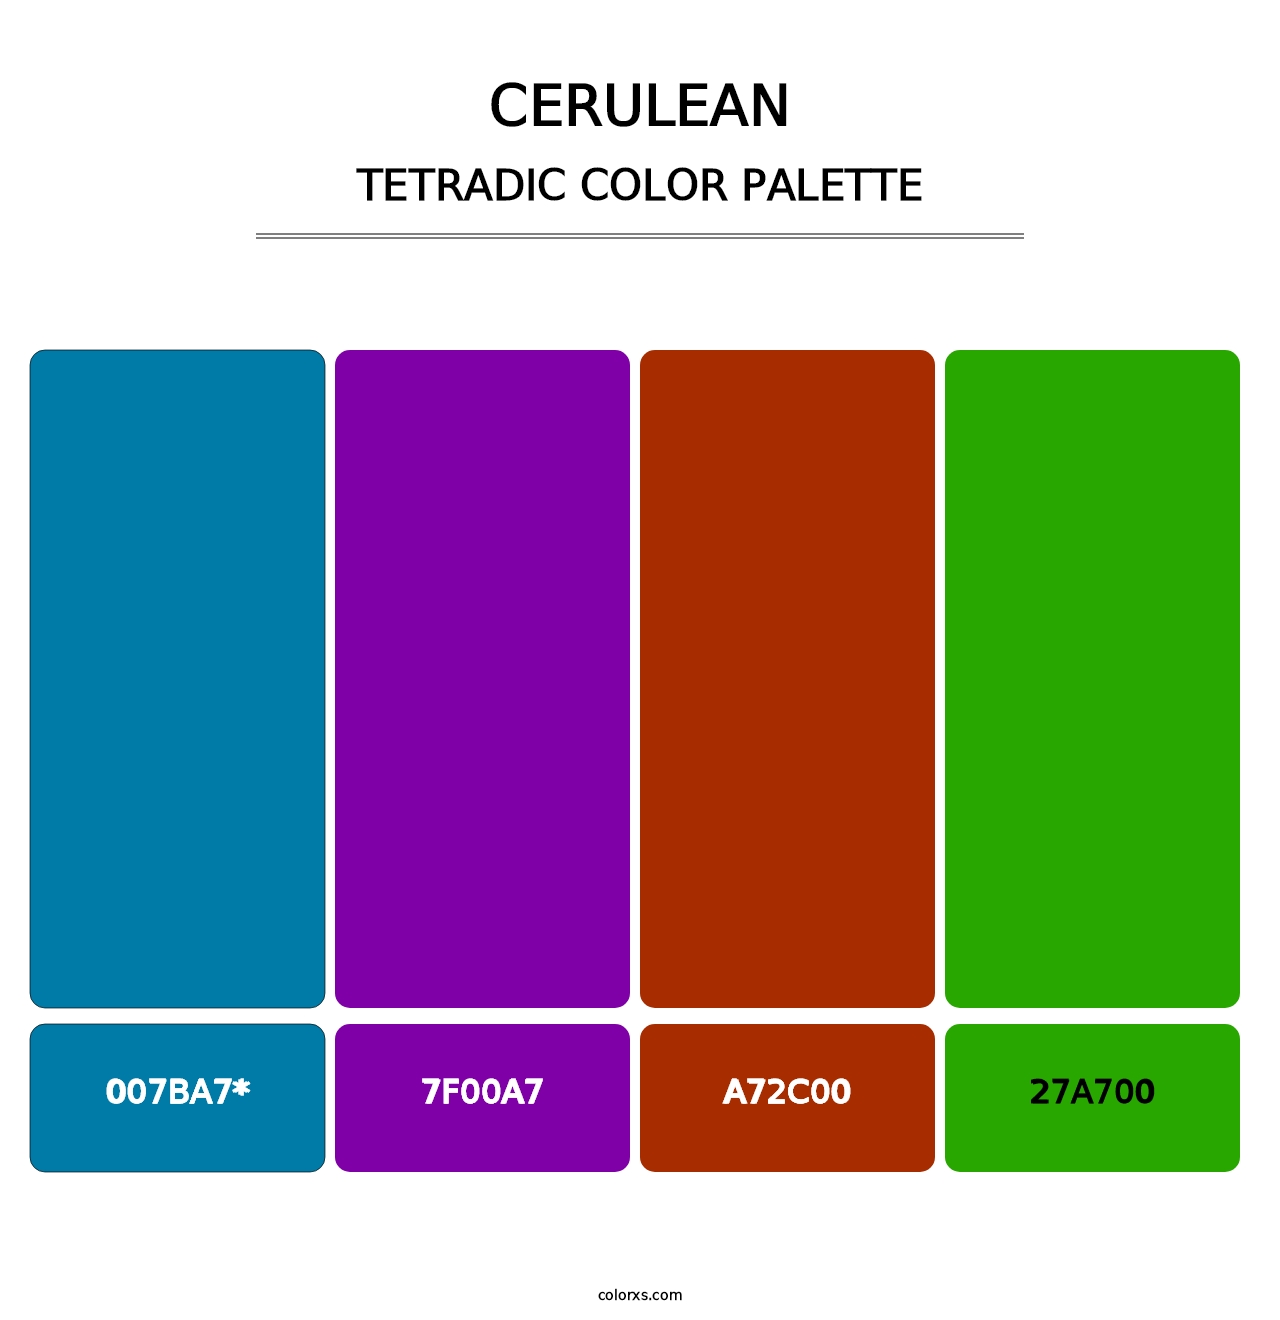 Cerulean - Tetradic Color Palette